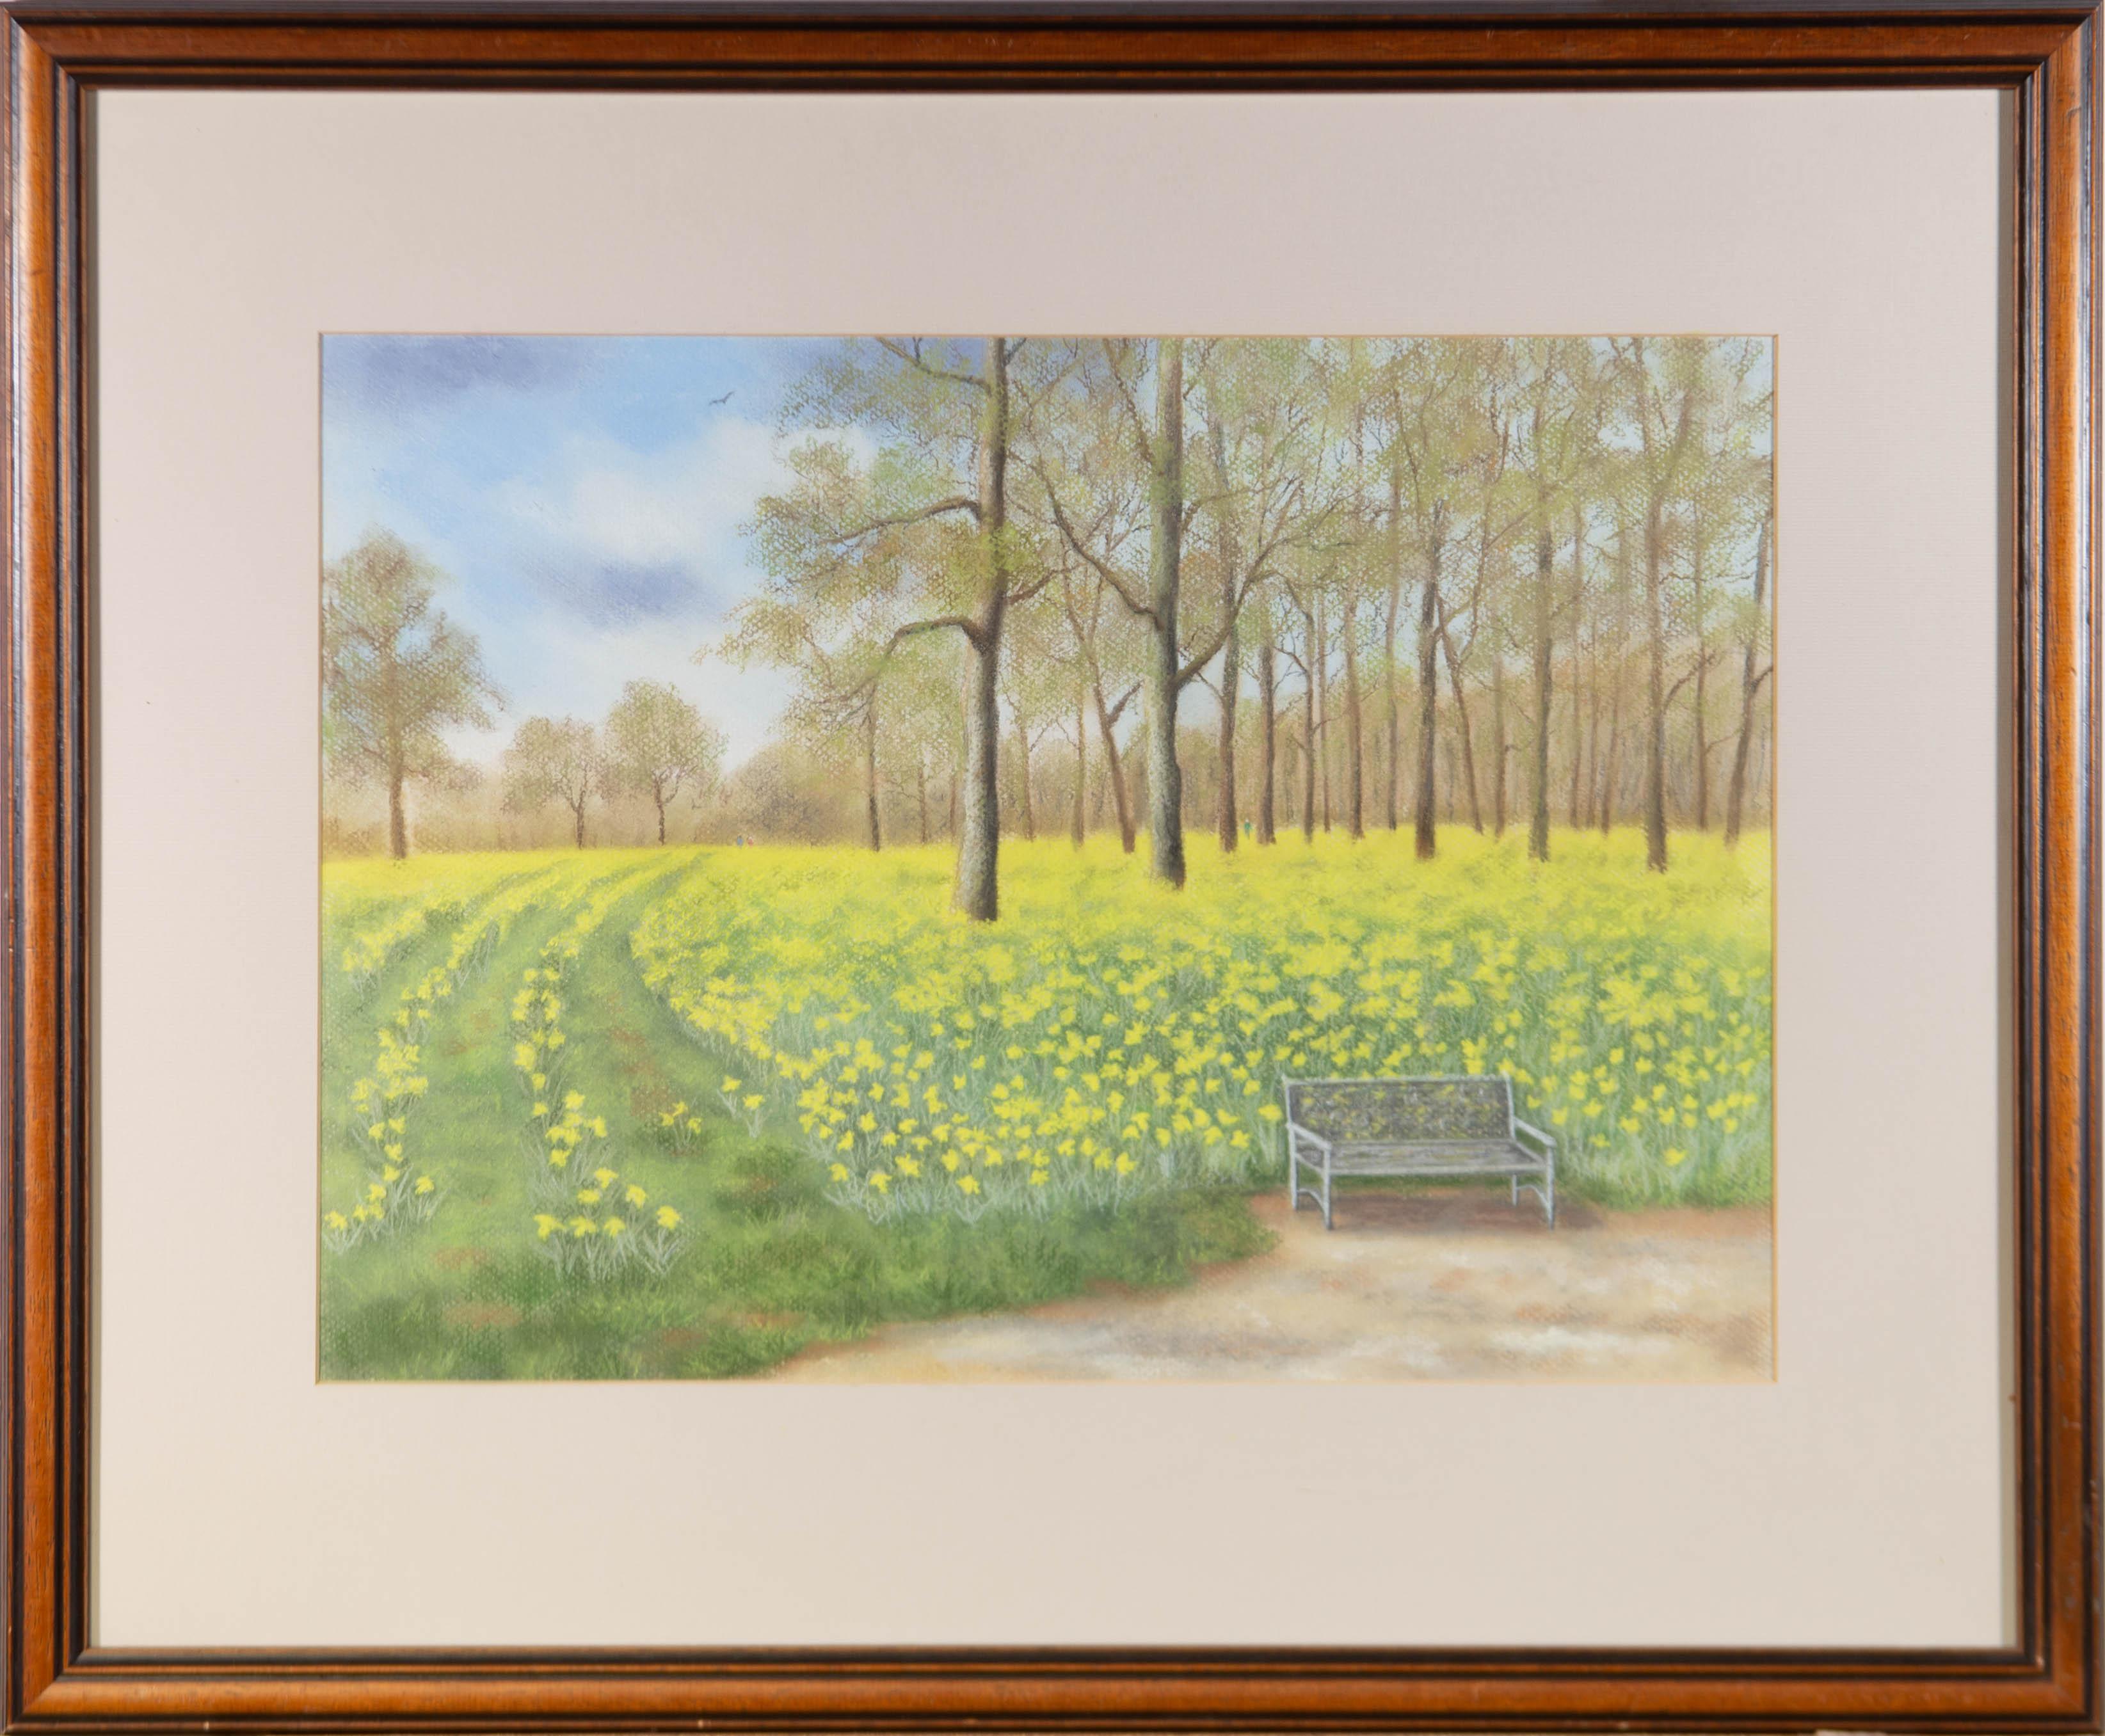 Unknown Landscape Art – Pastell des 20. Jahrhunderts - The Park Bench